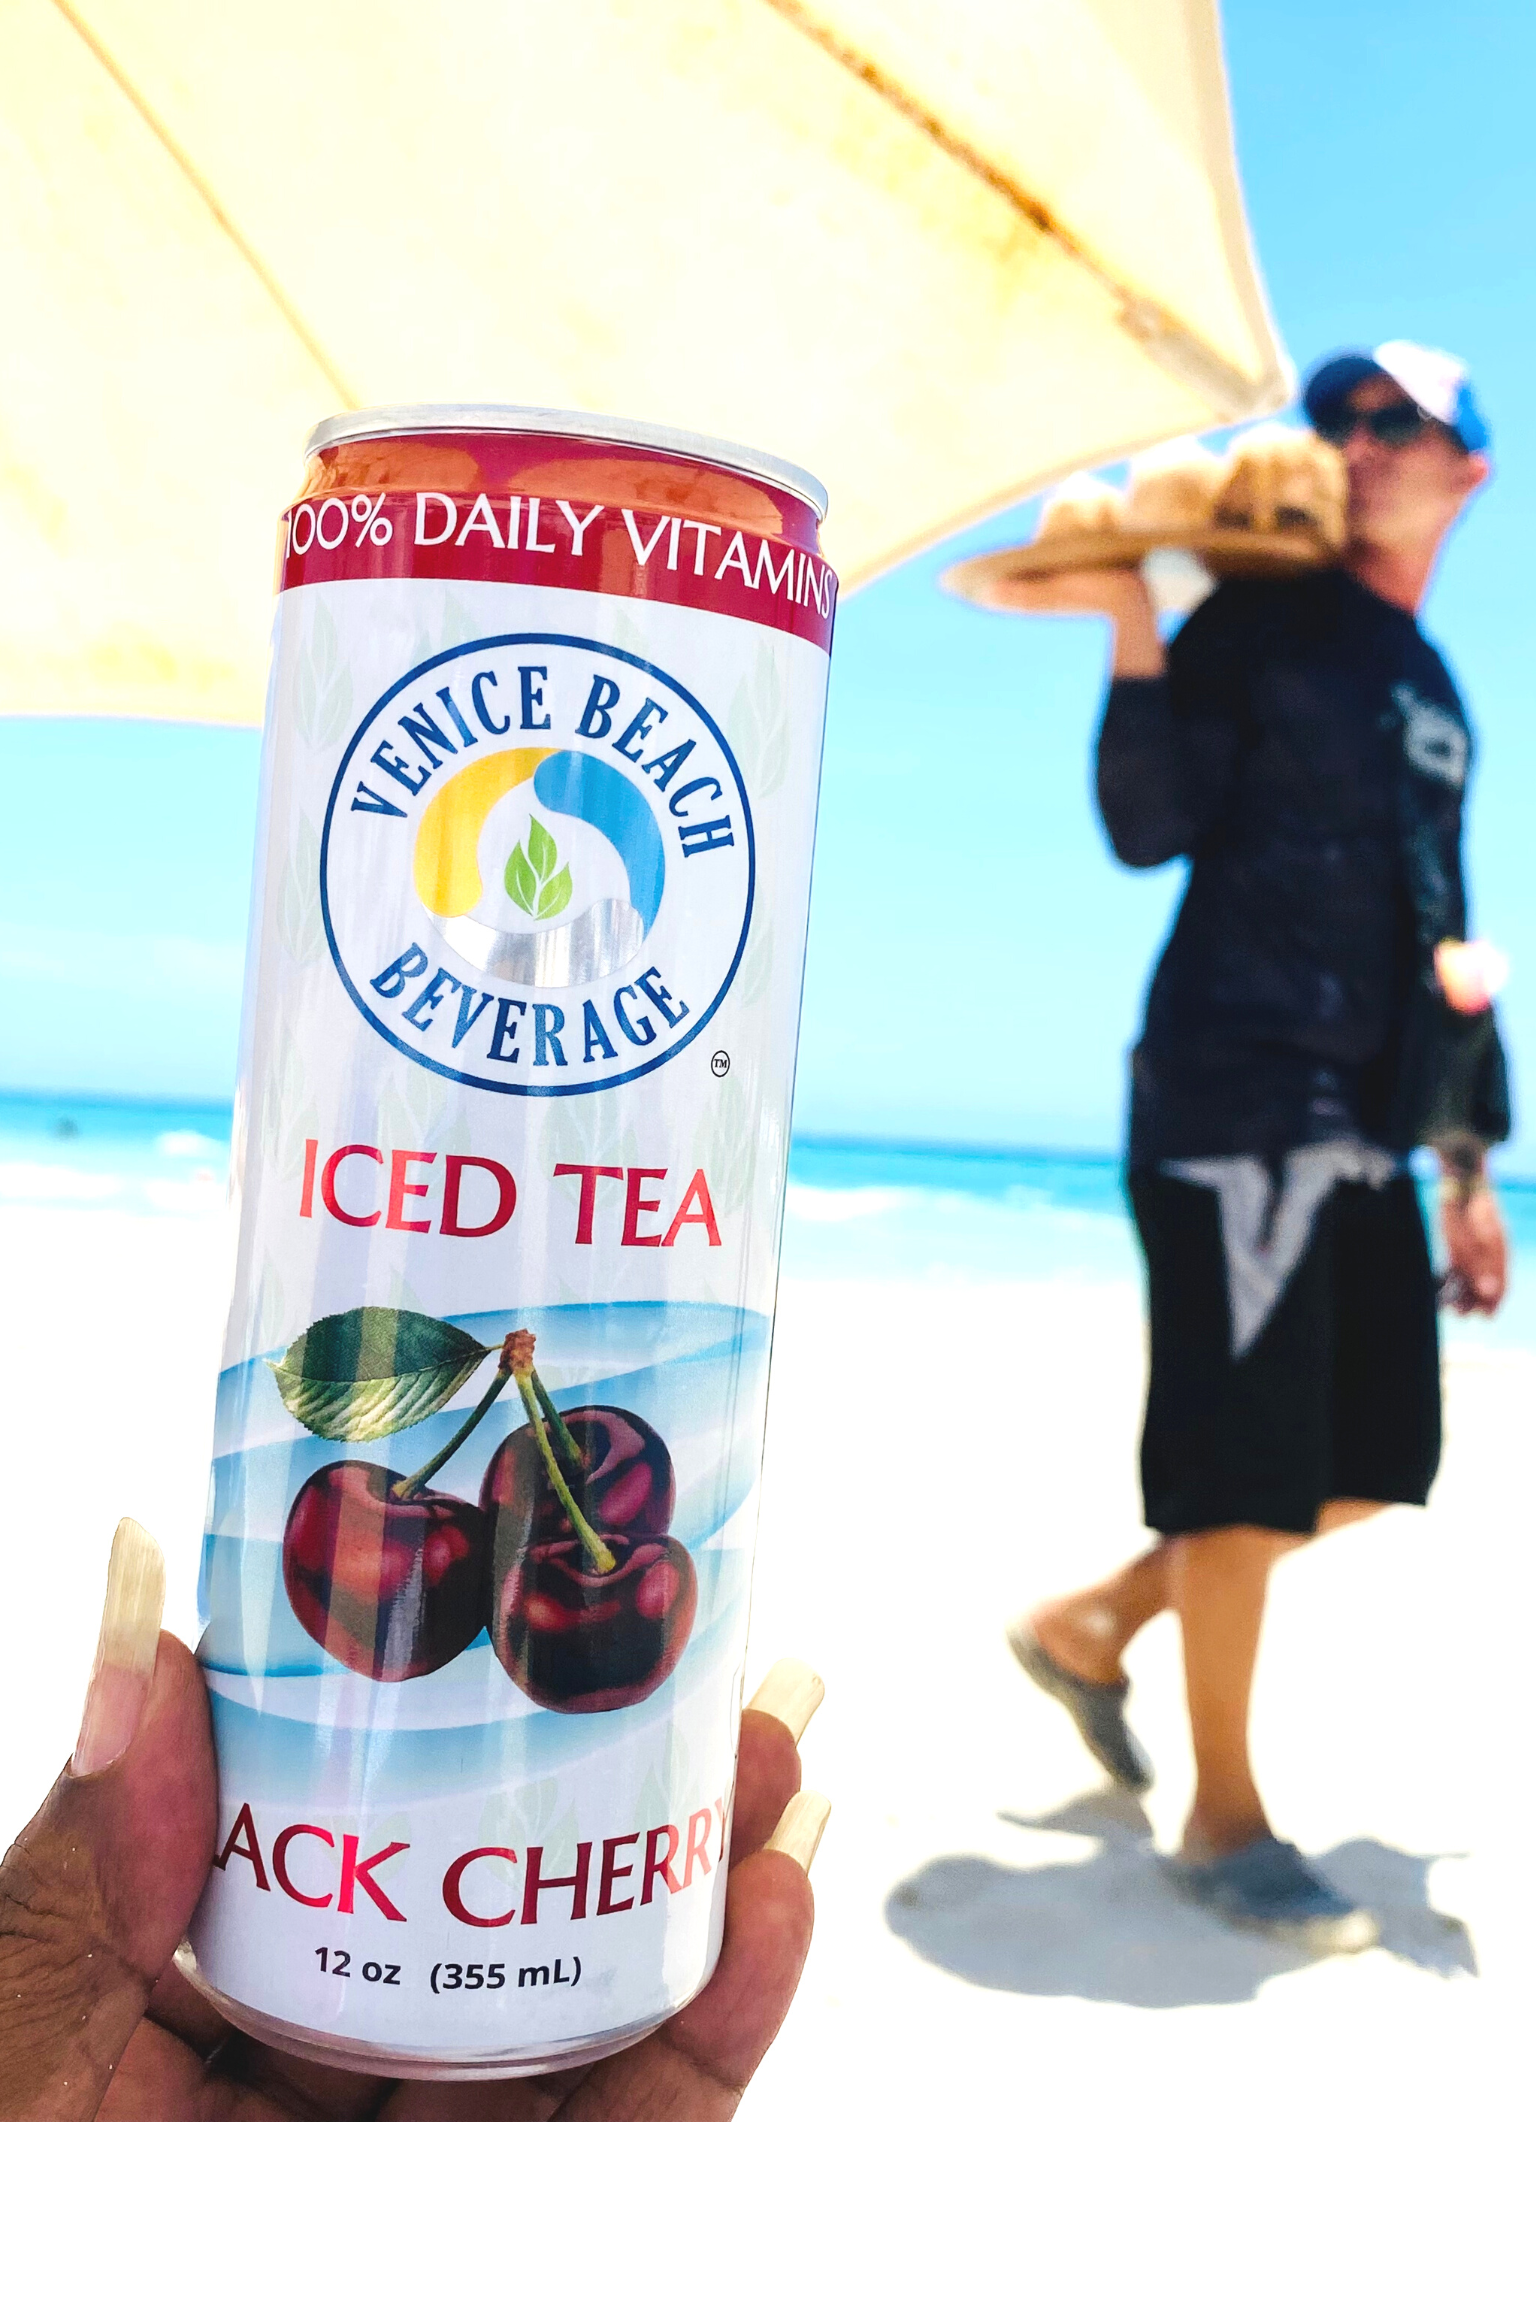 Original Black Cherry Vitamin Iced Tea